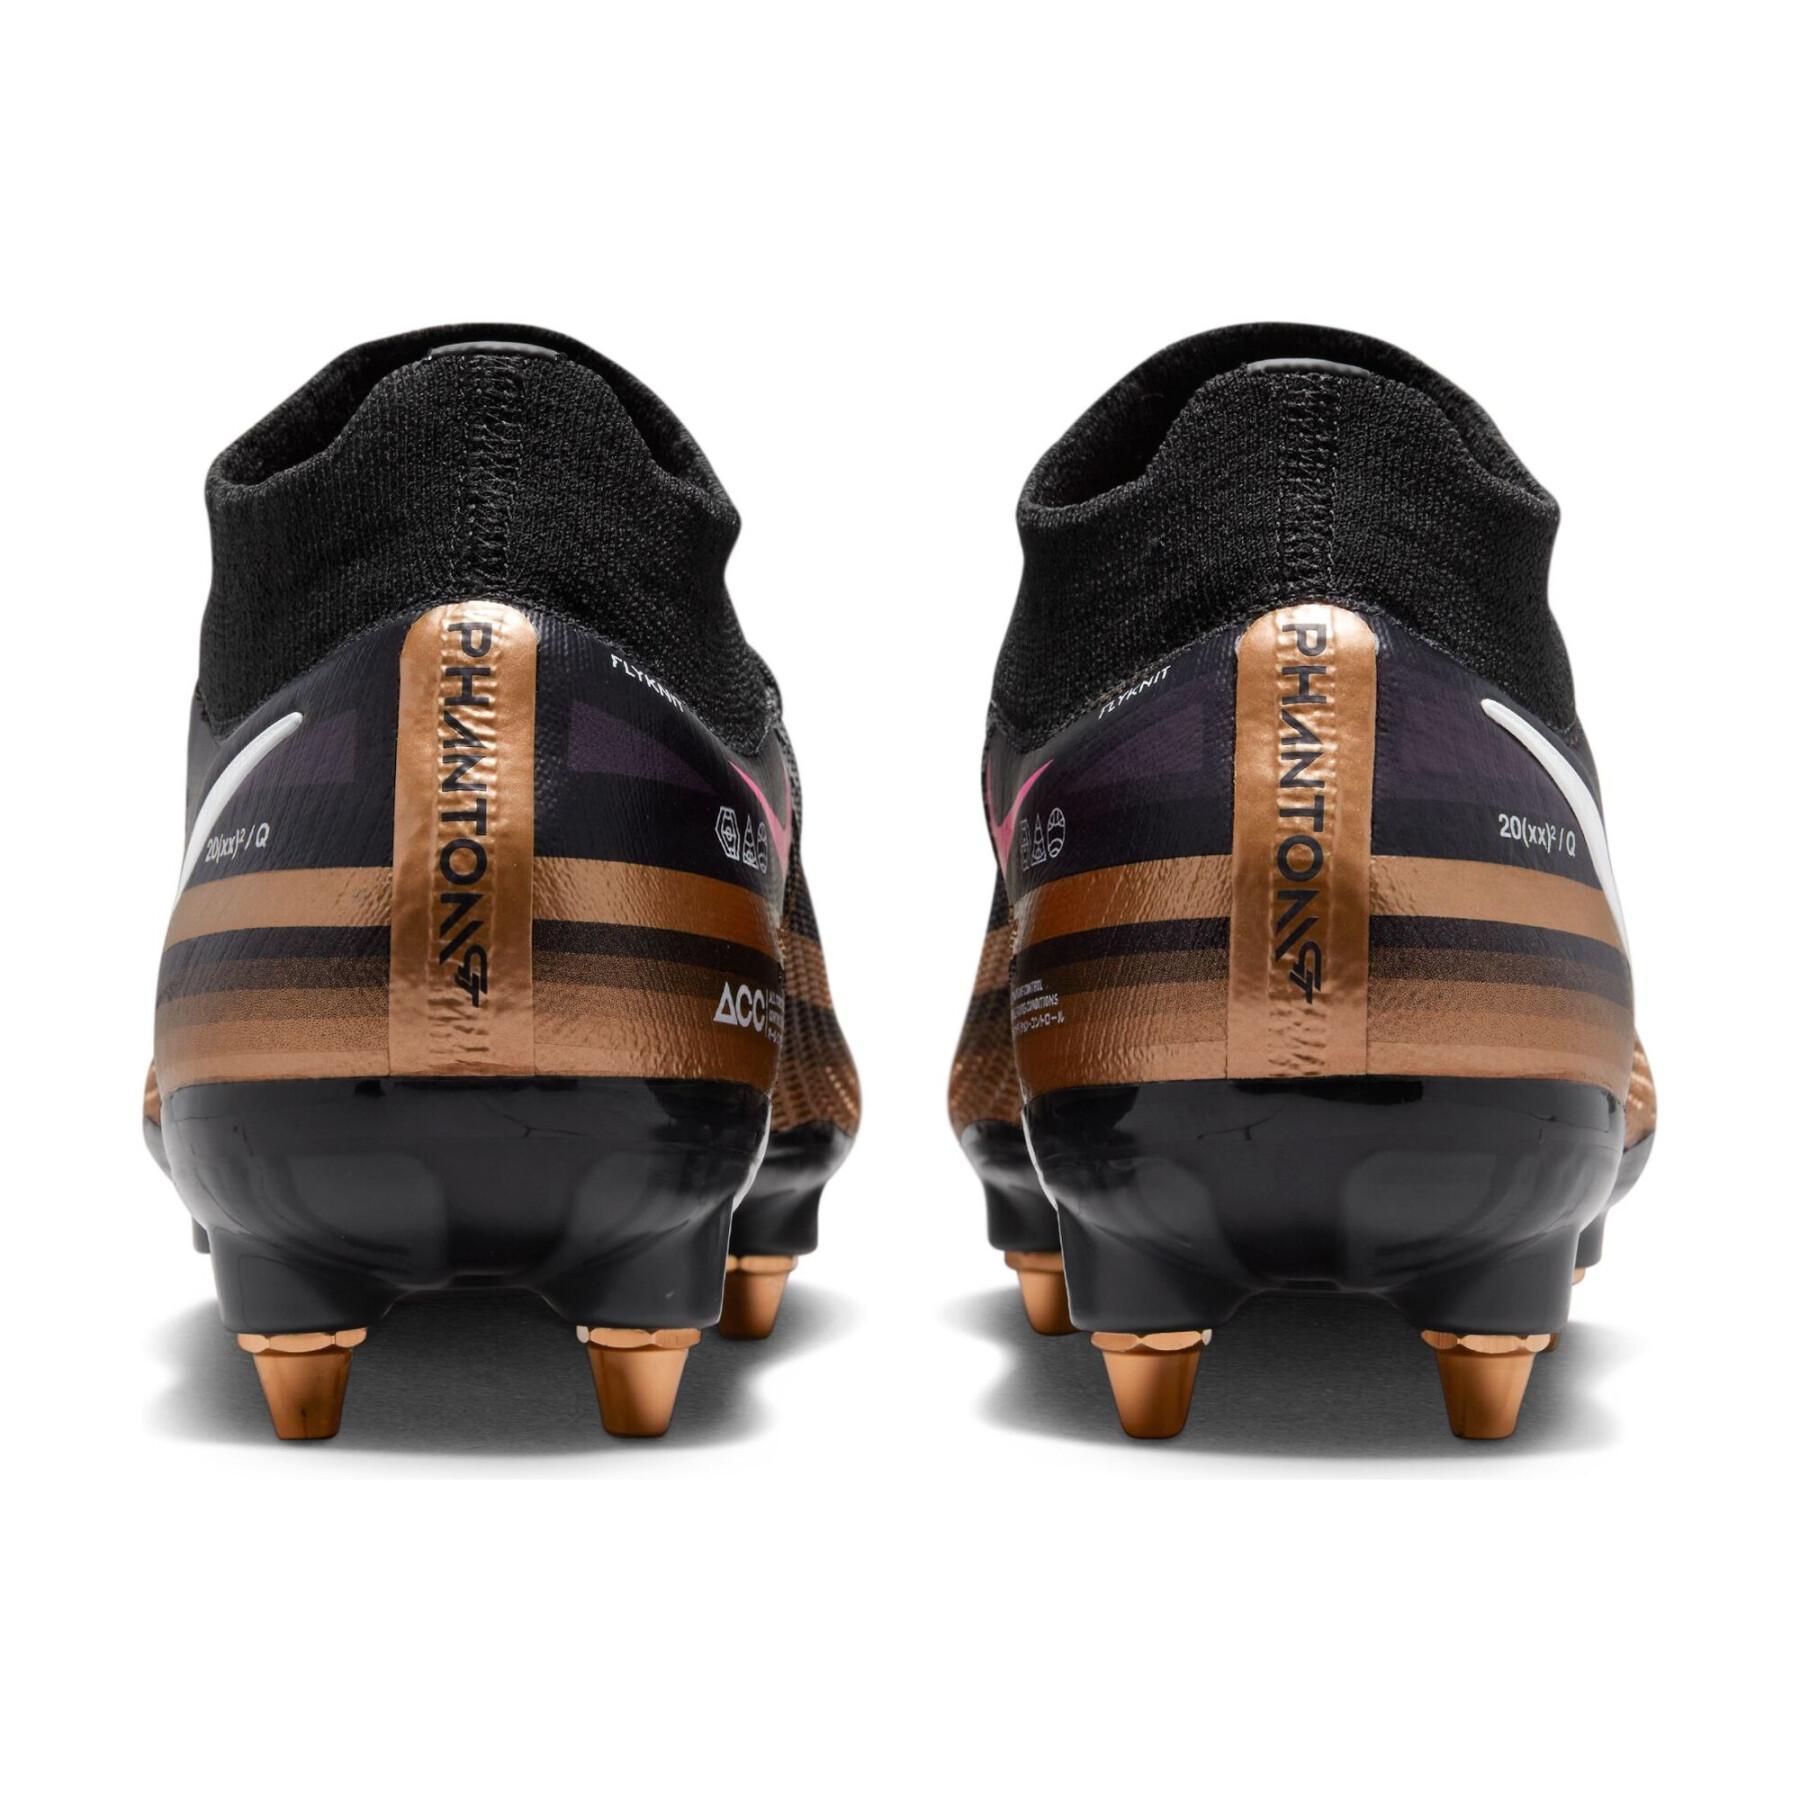 Buty piłkarskie Nike PhantomGT2 Elite Dynamic Fit SG-Pro AC - Generation Pack